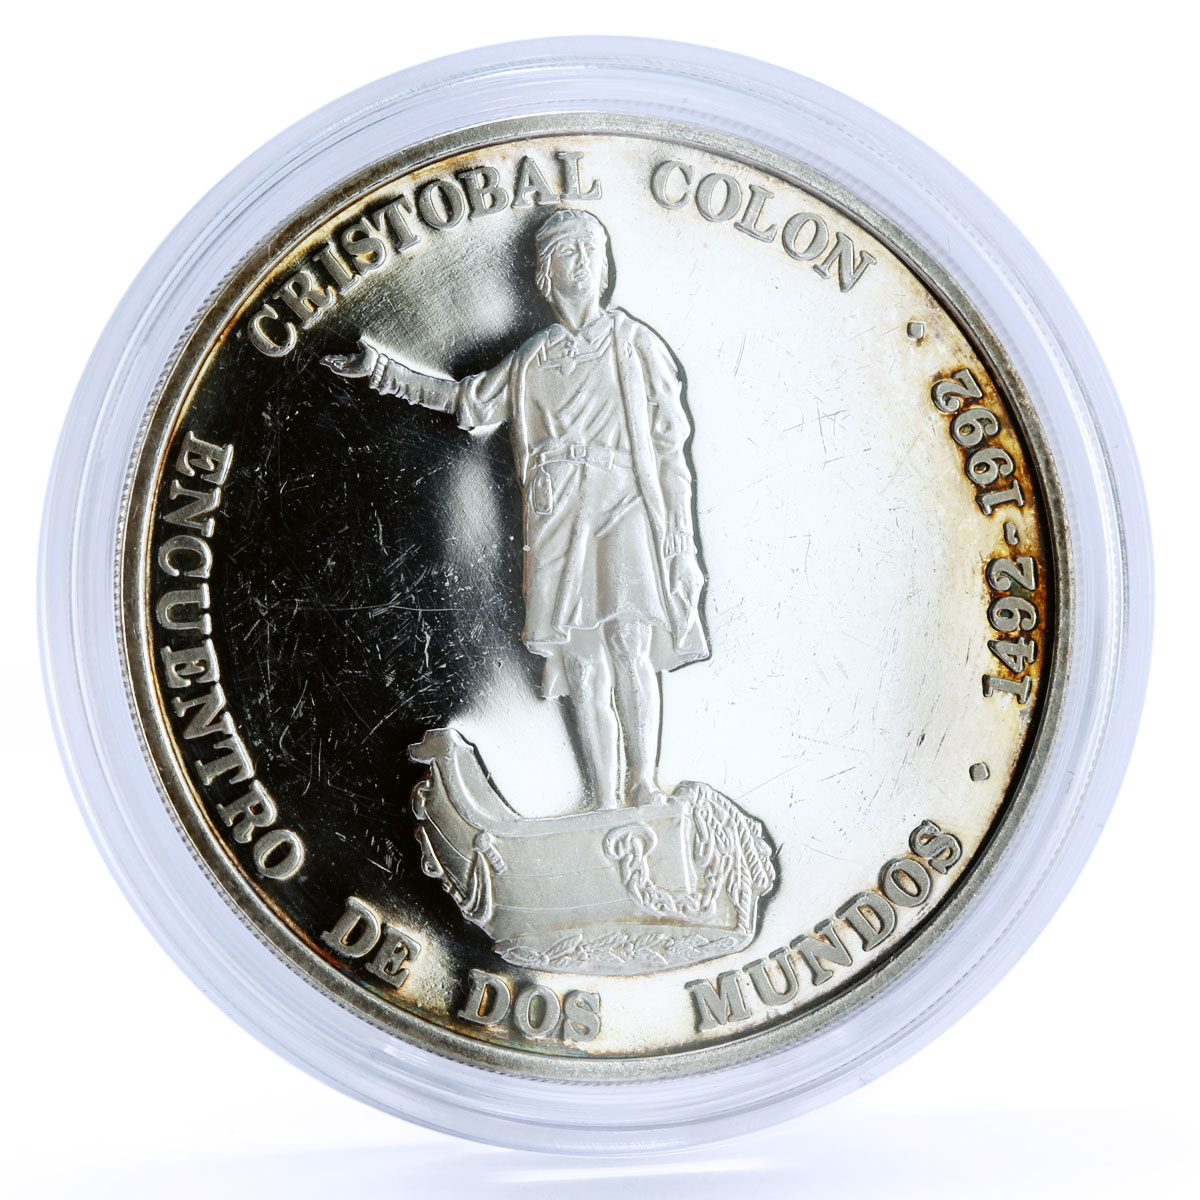 Venezuela 1100 bolivares Columbus Cristobal Colon Statue proof silver coin 1992